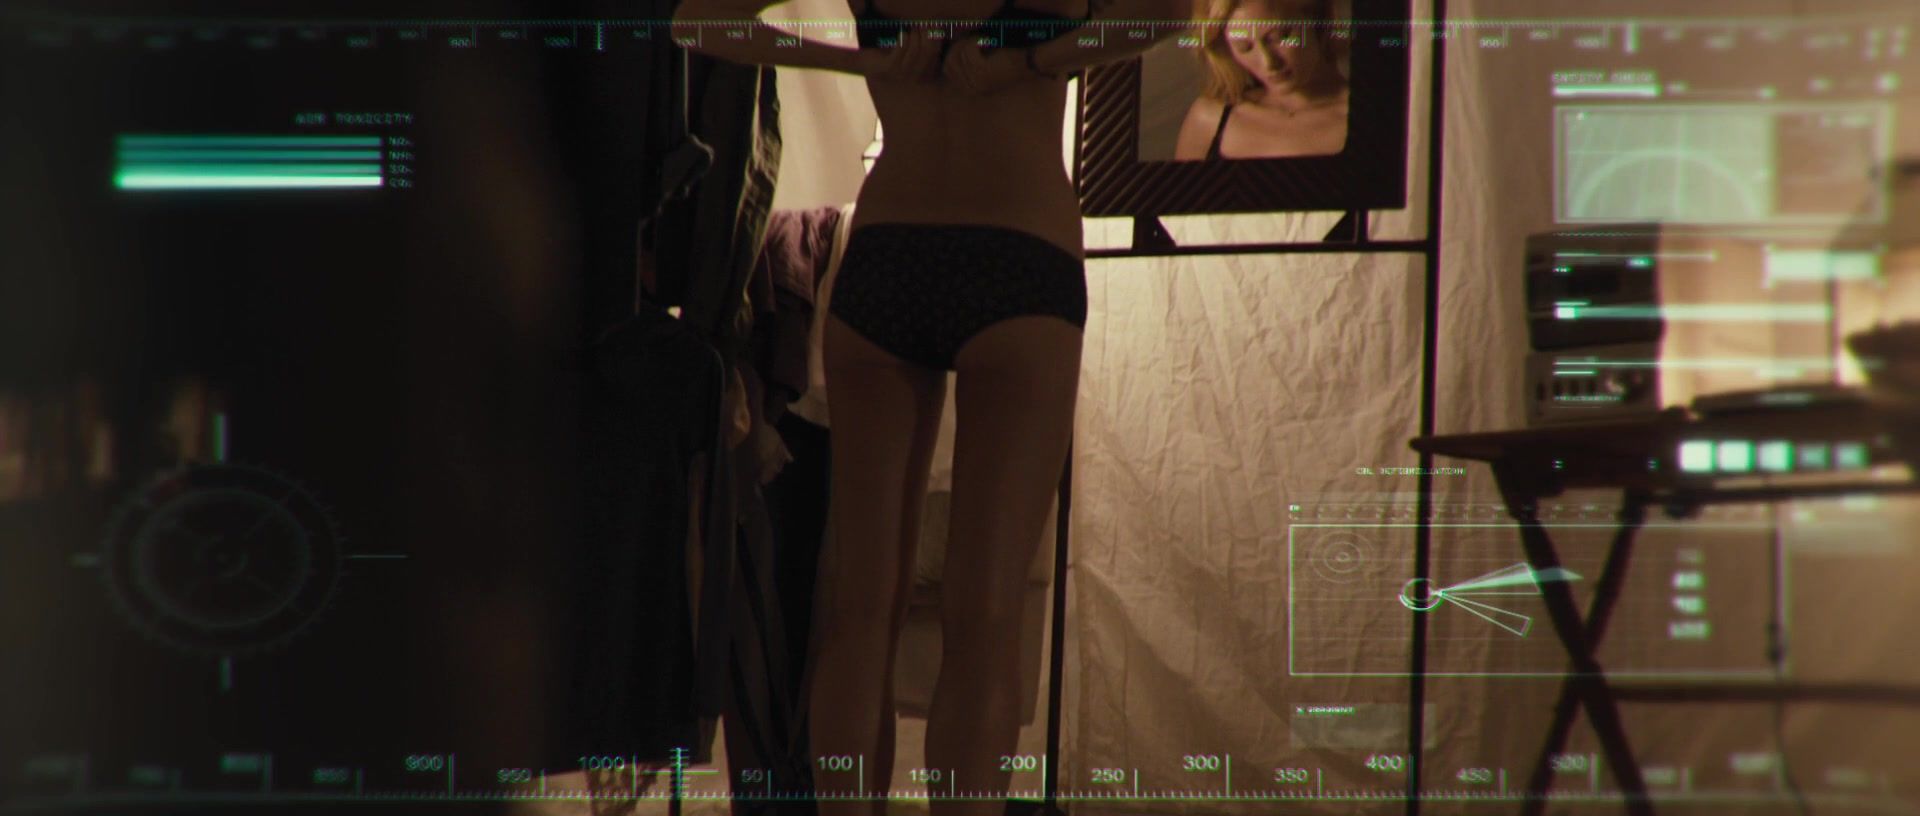 Live Hot actress Ashley Hinshaw from movie The Pyramid (2014) Transexual - 1